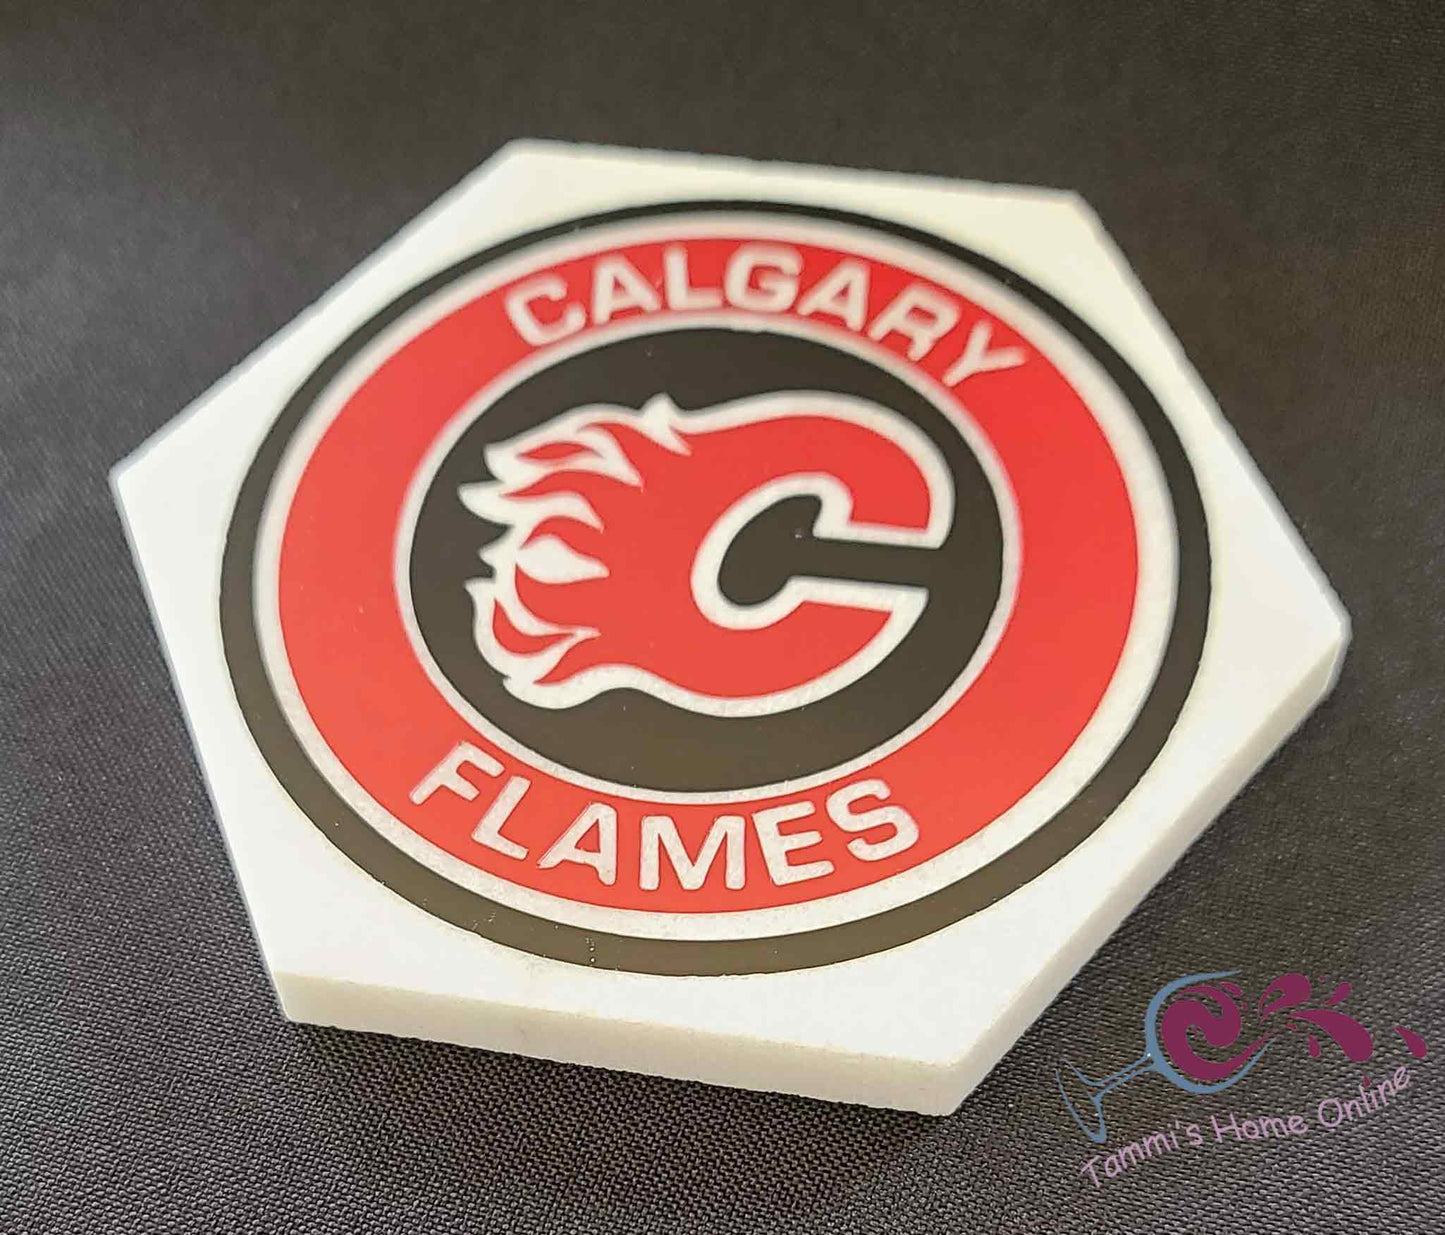 Calgary Flames Hockey Team - Marble Coaster